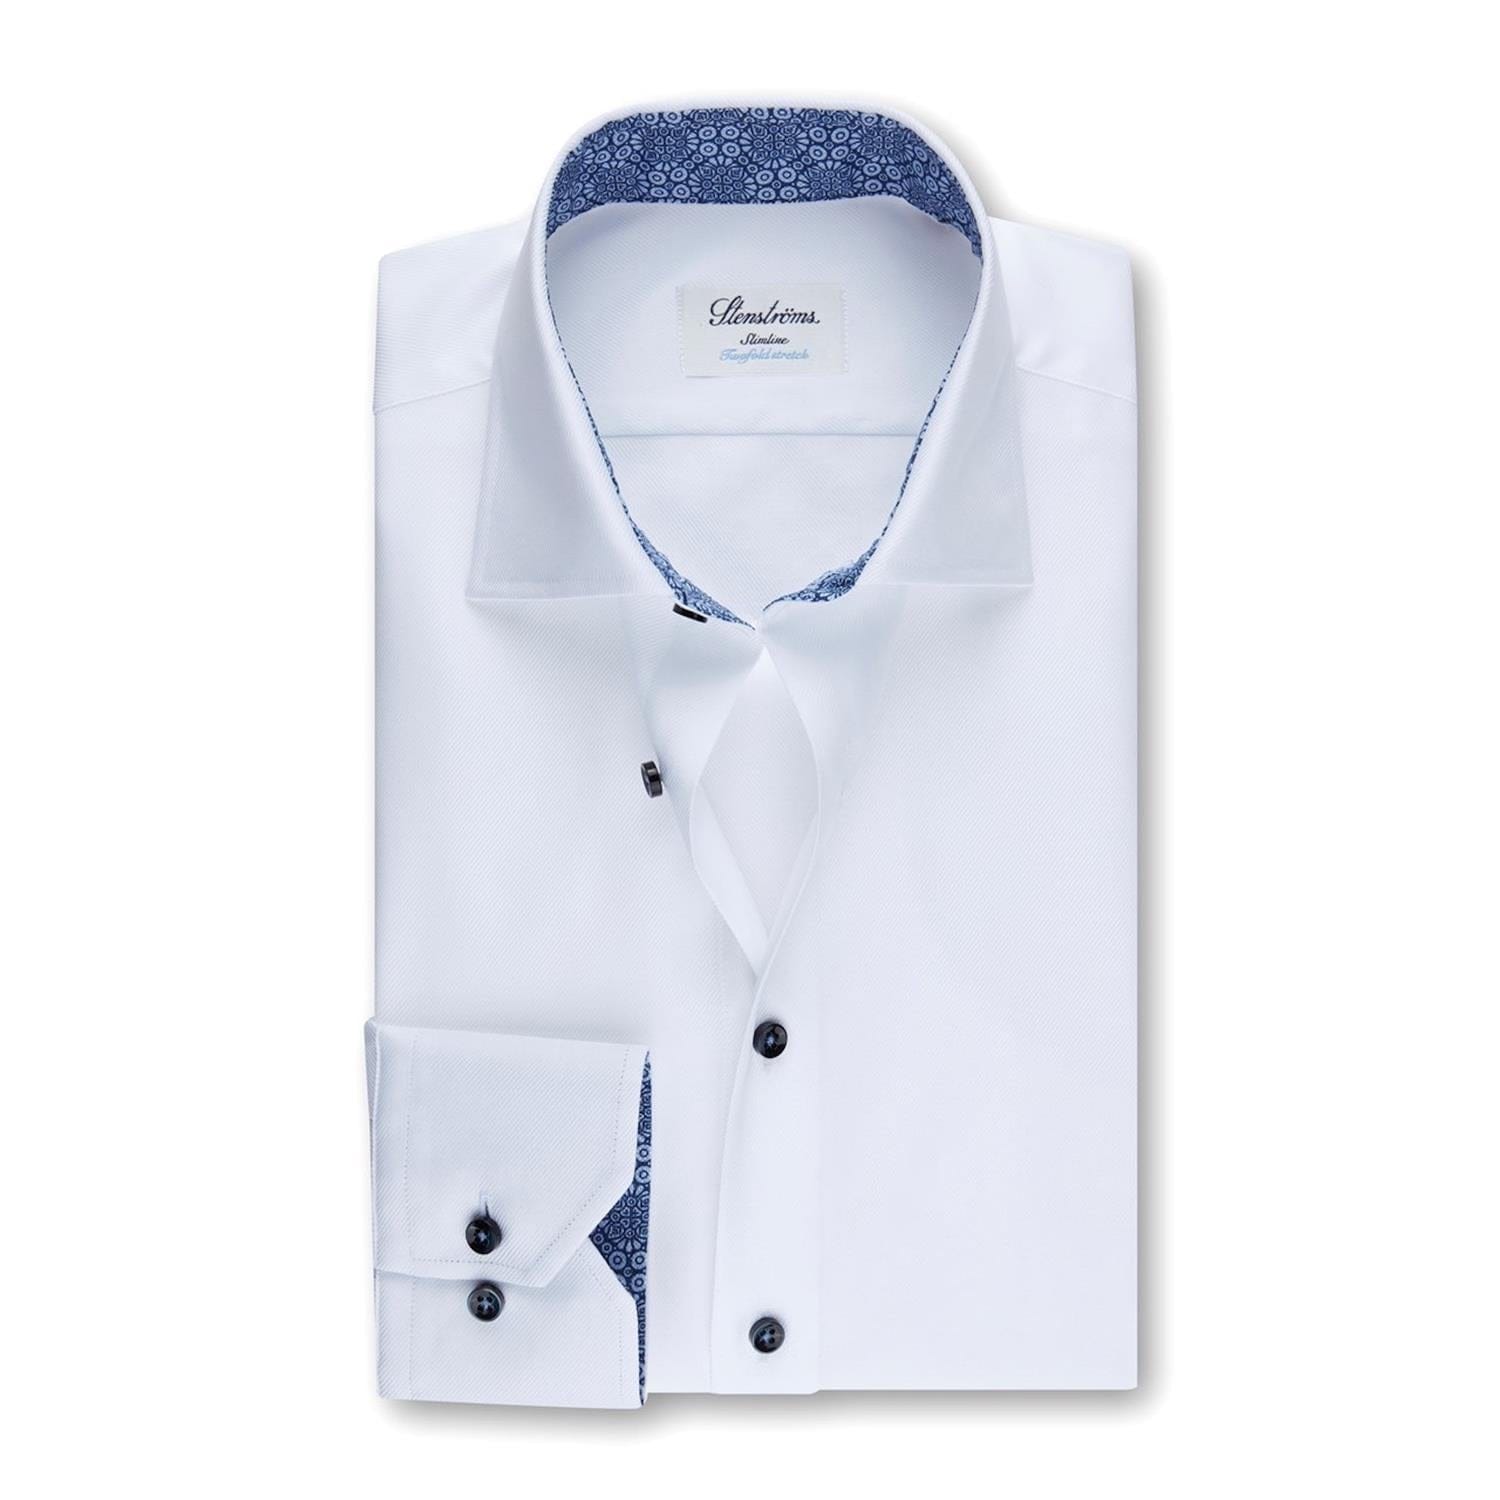 White Slimline Stretch Shirt w. Contrast Details